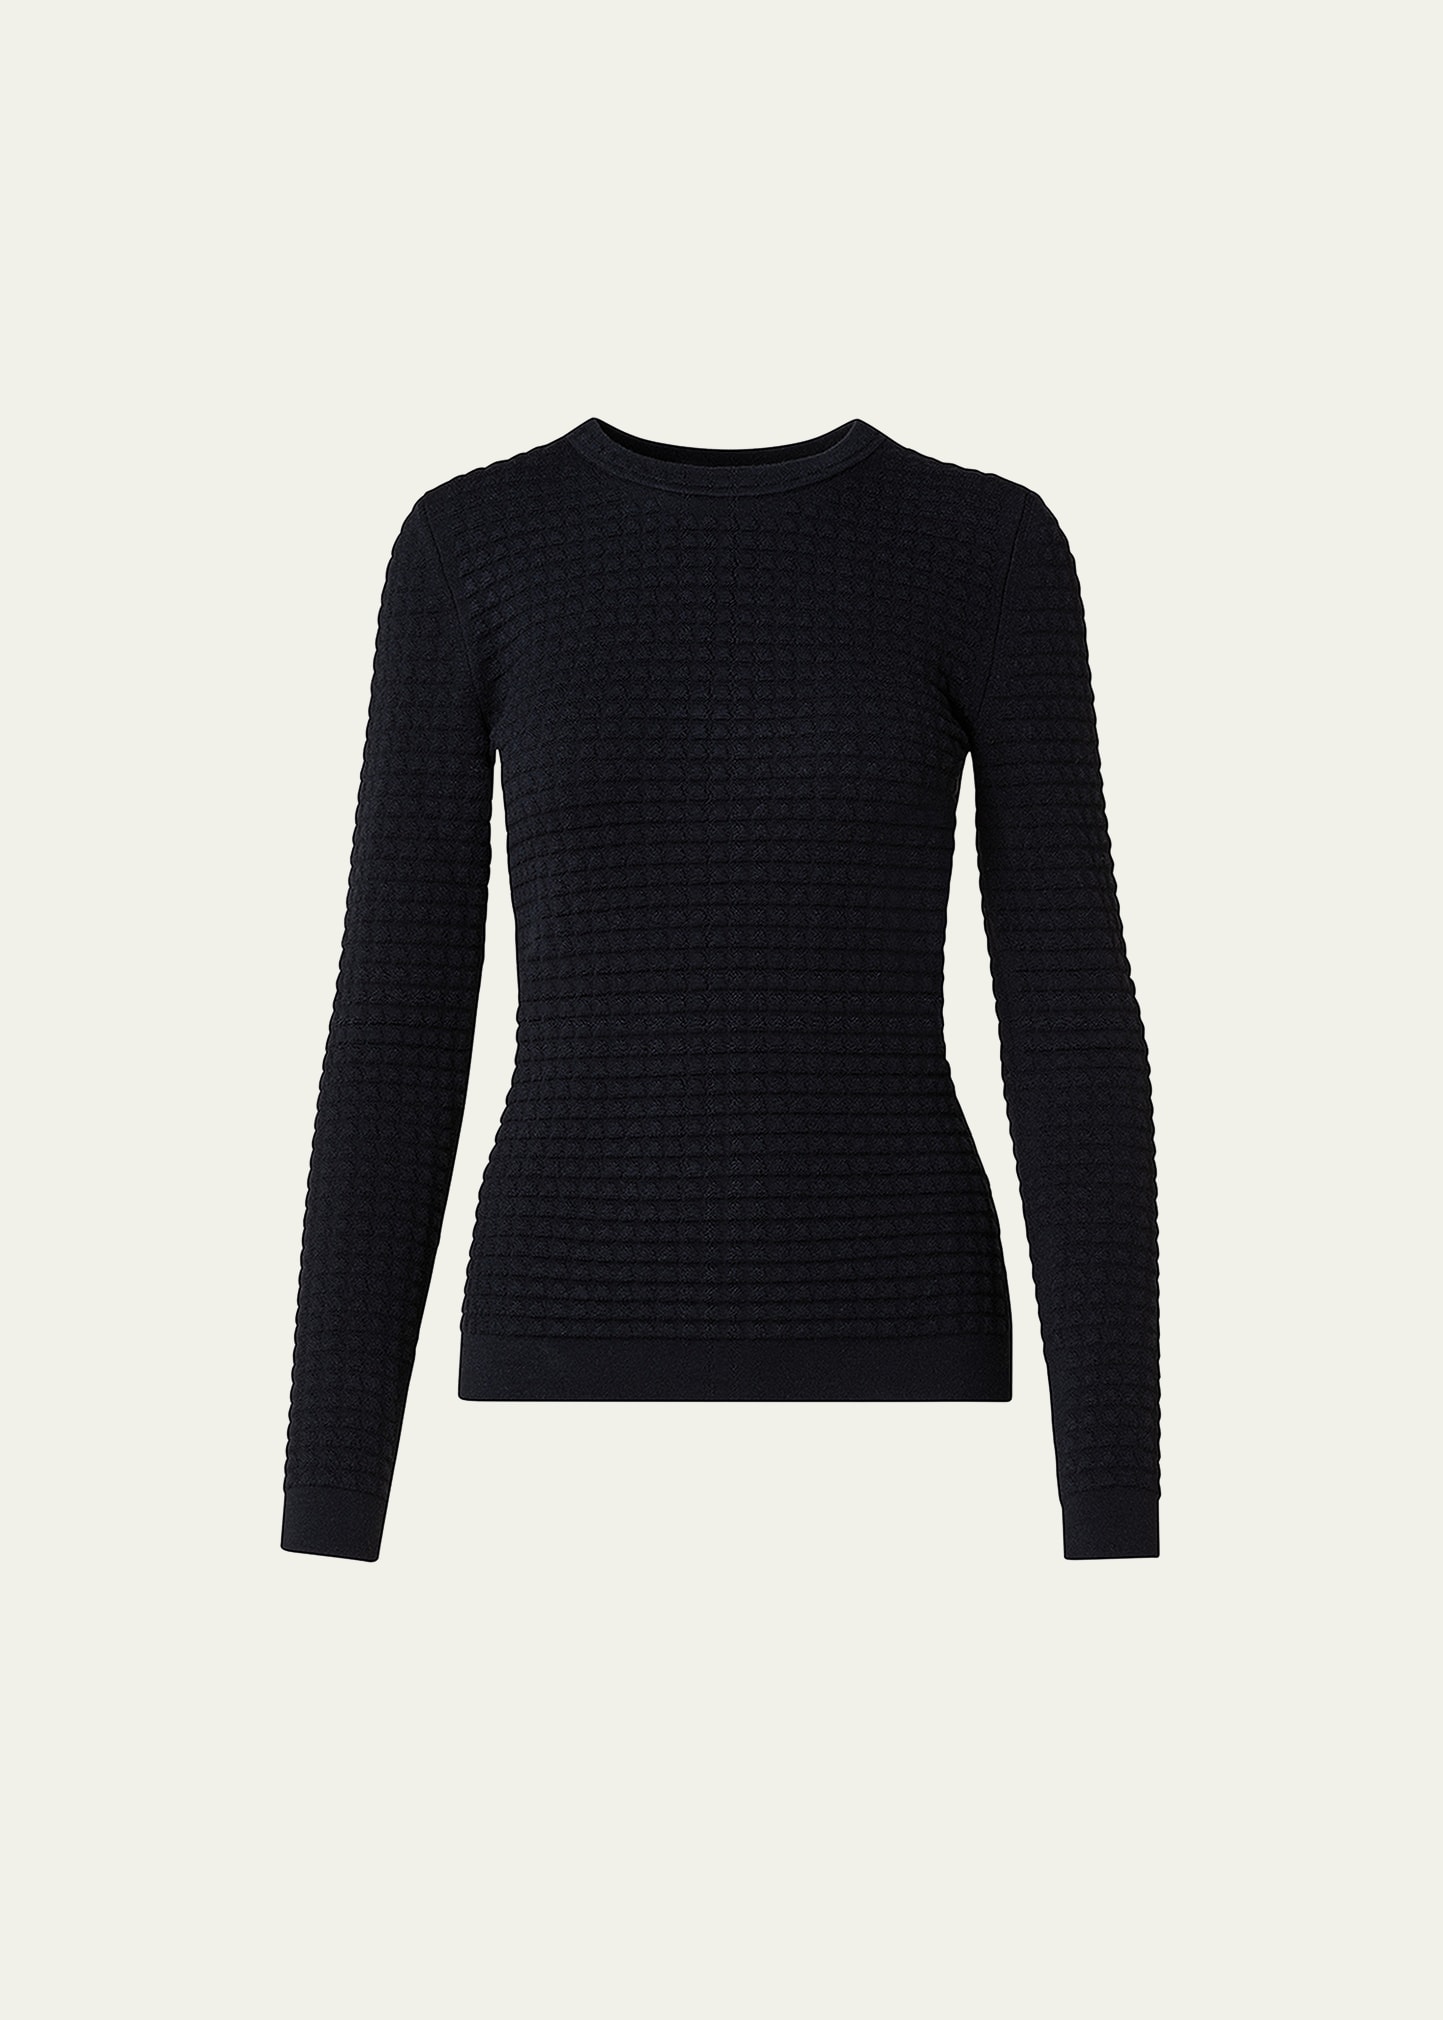 Trapezoid Grid Jacquard Wool Sweater